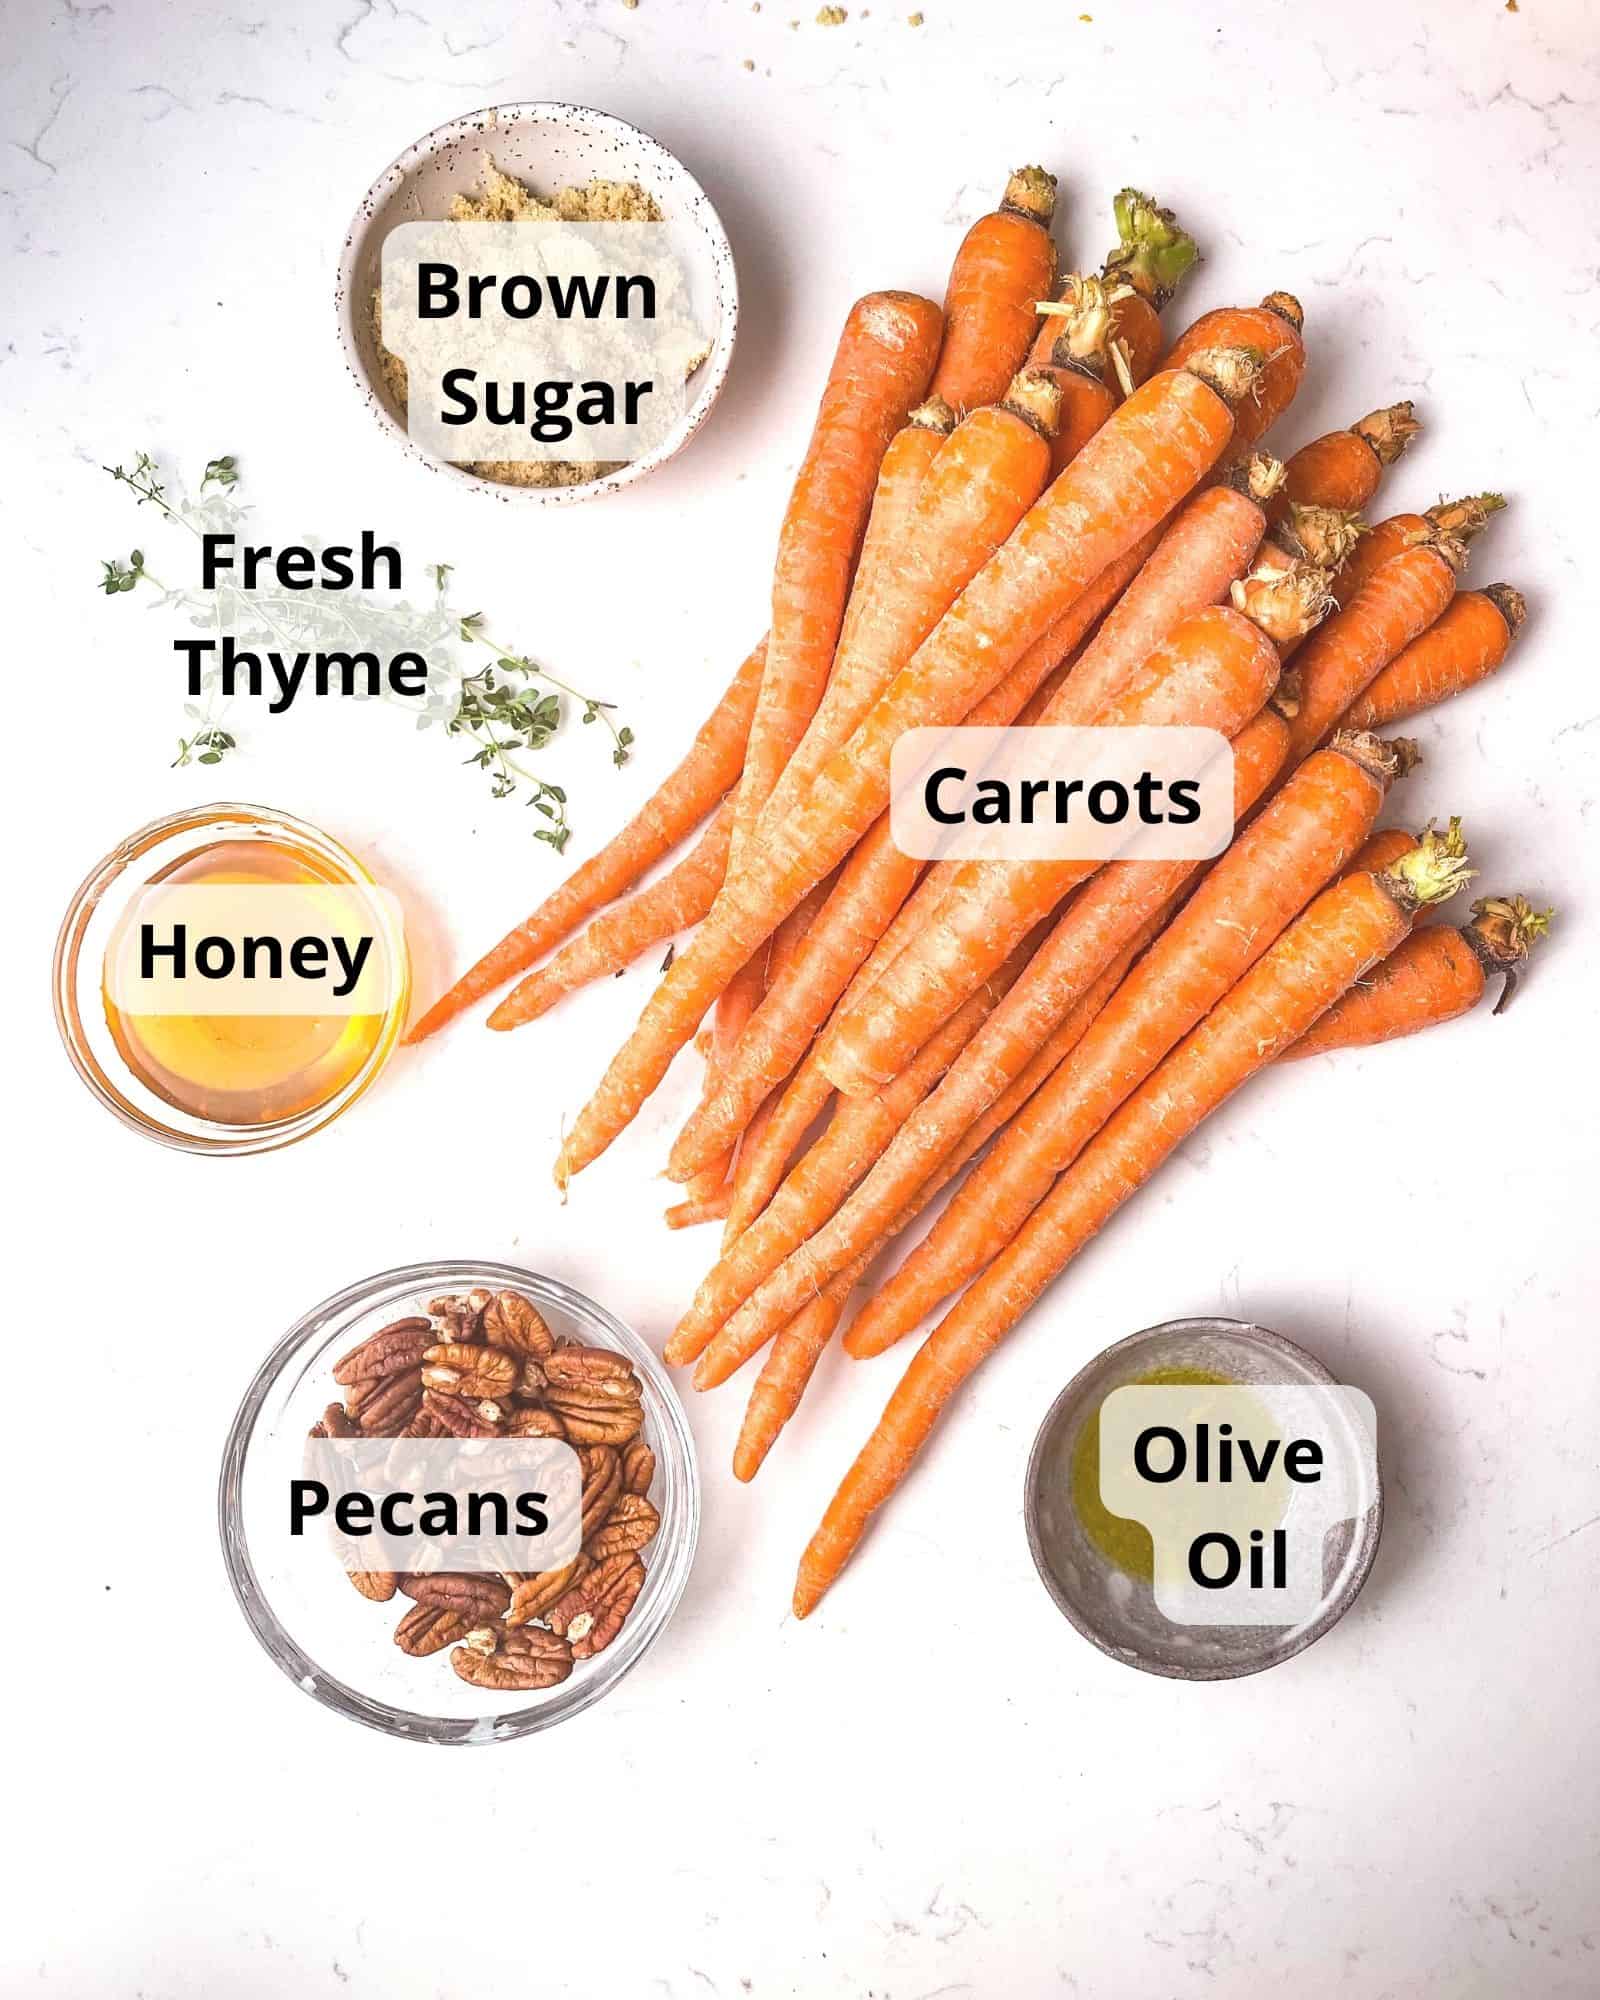 ingredients to make brown sugar honey glazed carrots - carrots, brown sugar, honey, olive oil, pecans, and fresh thyme.